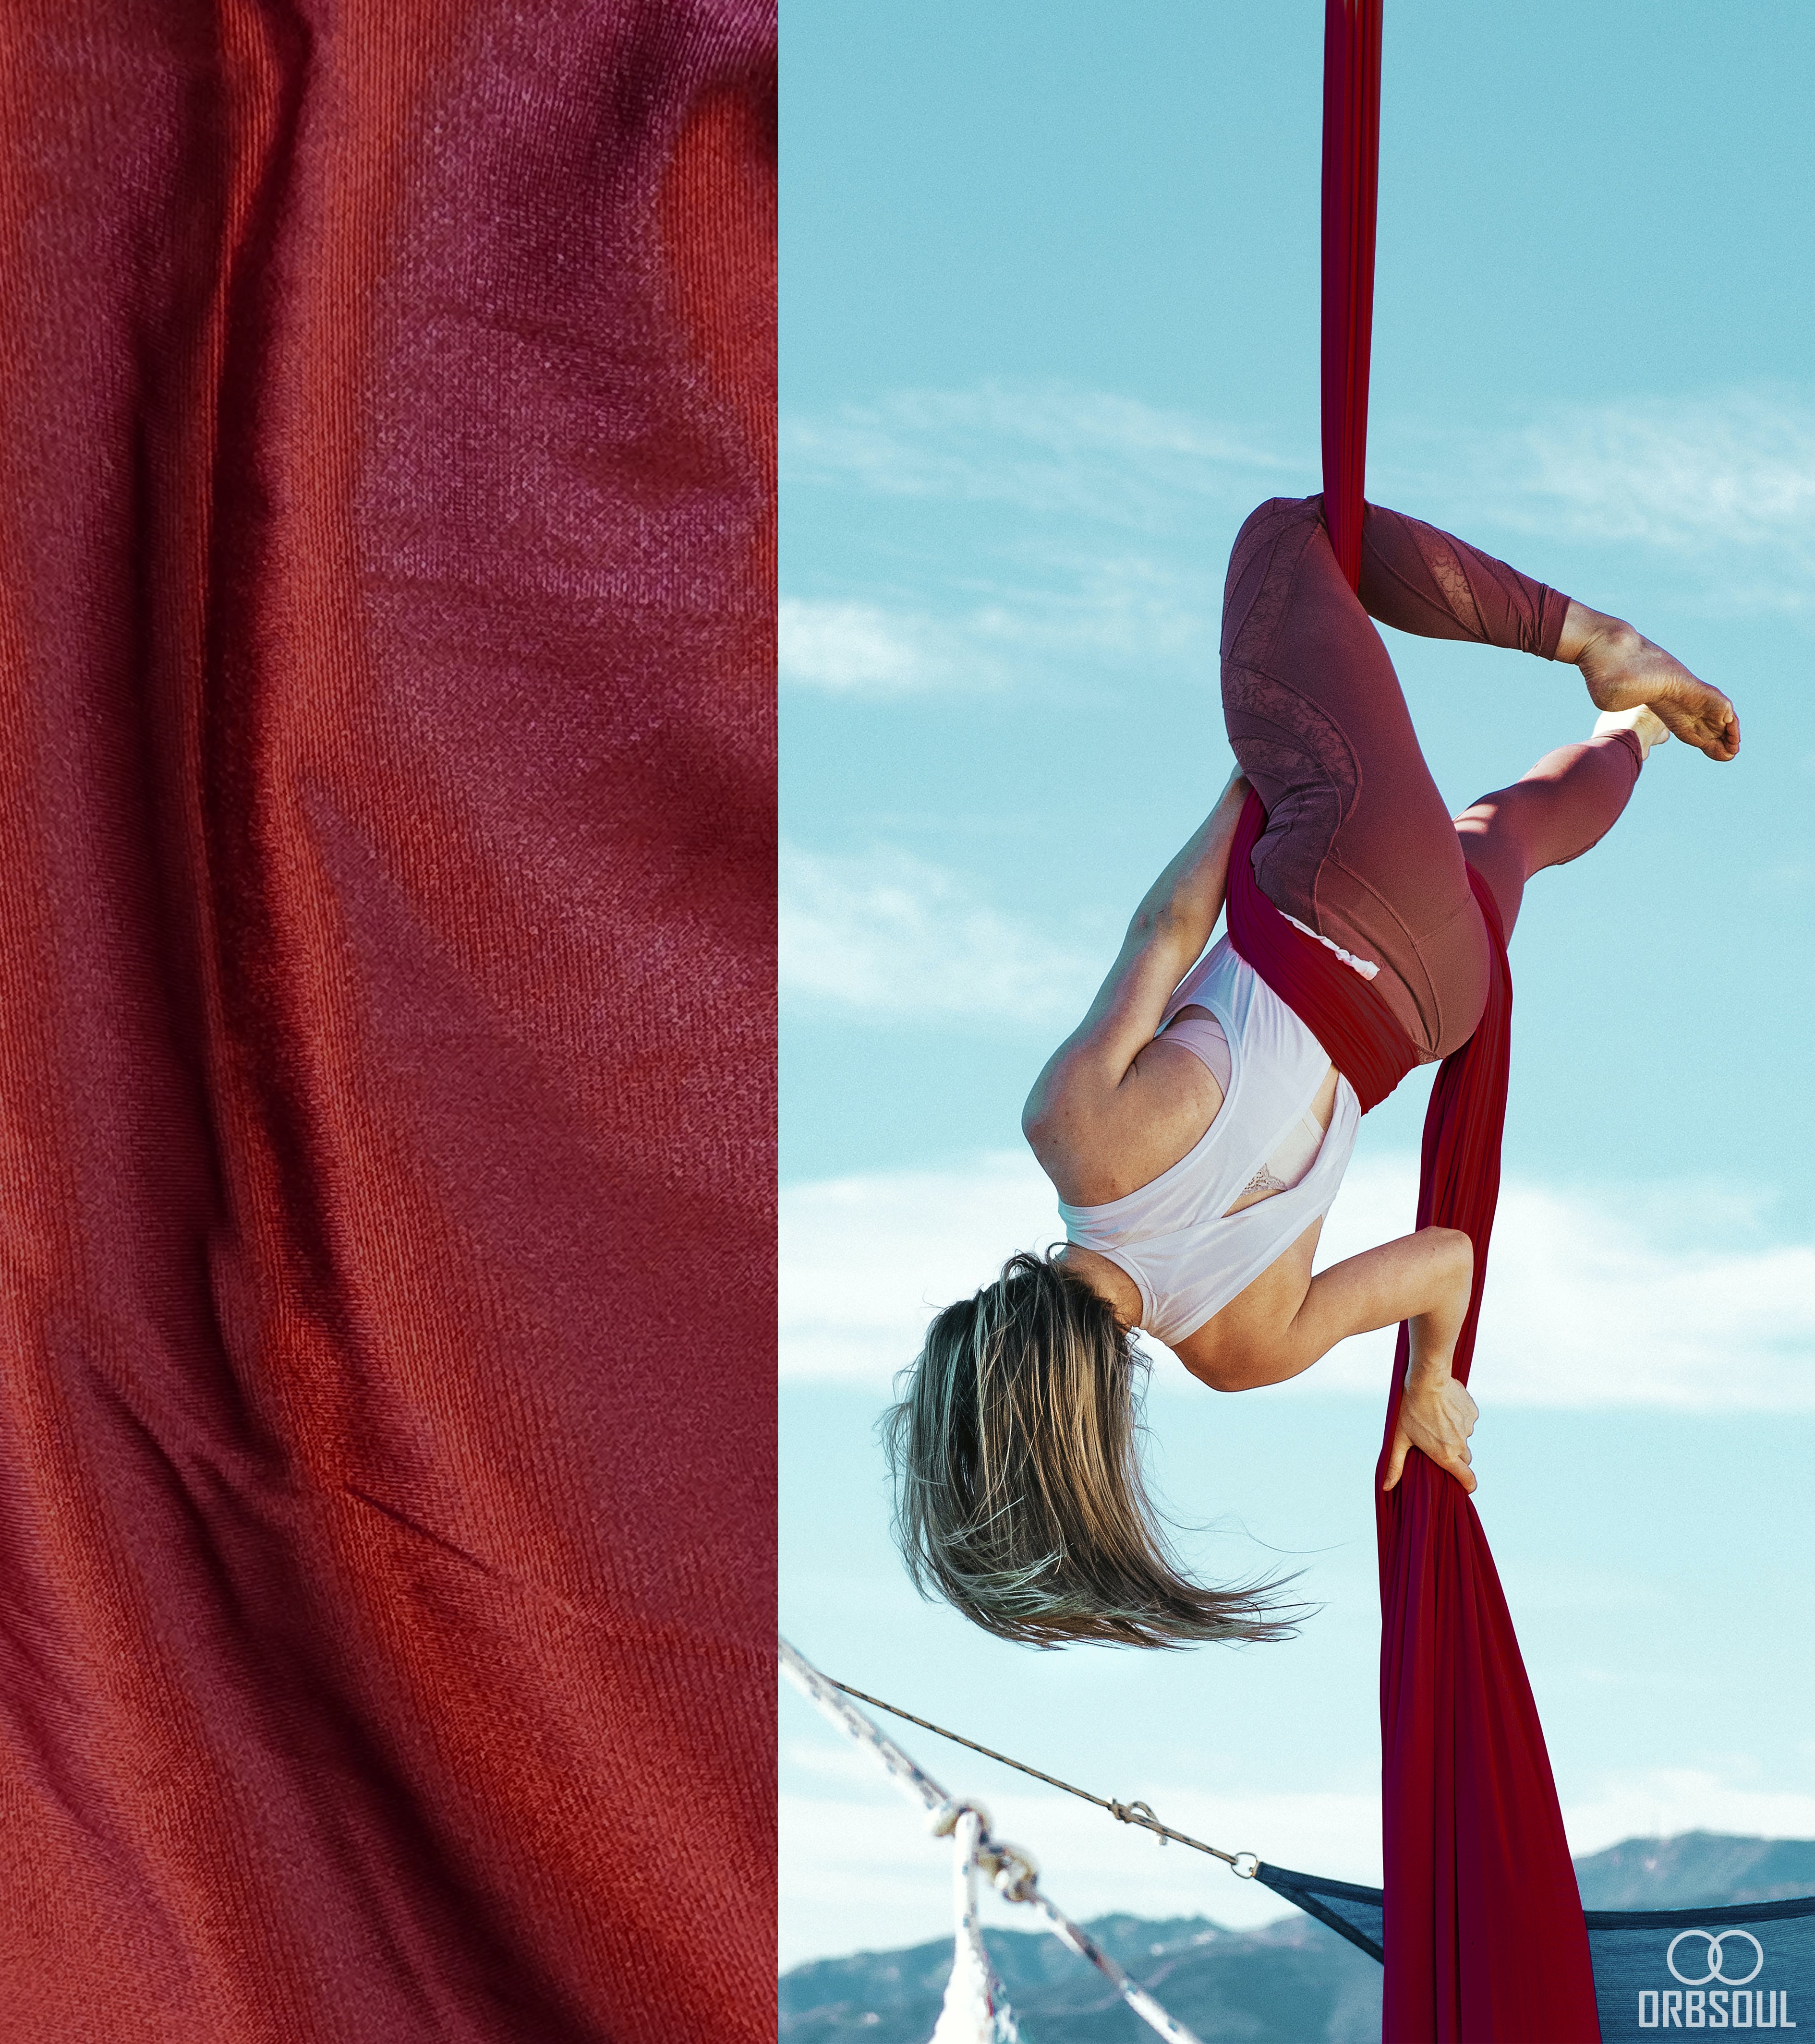 Orbsoul Aerial silks fabric. Woman on luxurious feeling aerial silks